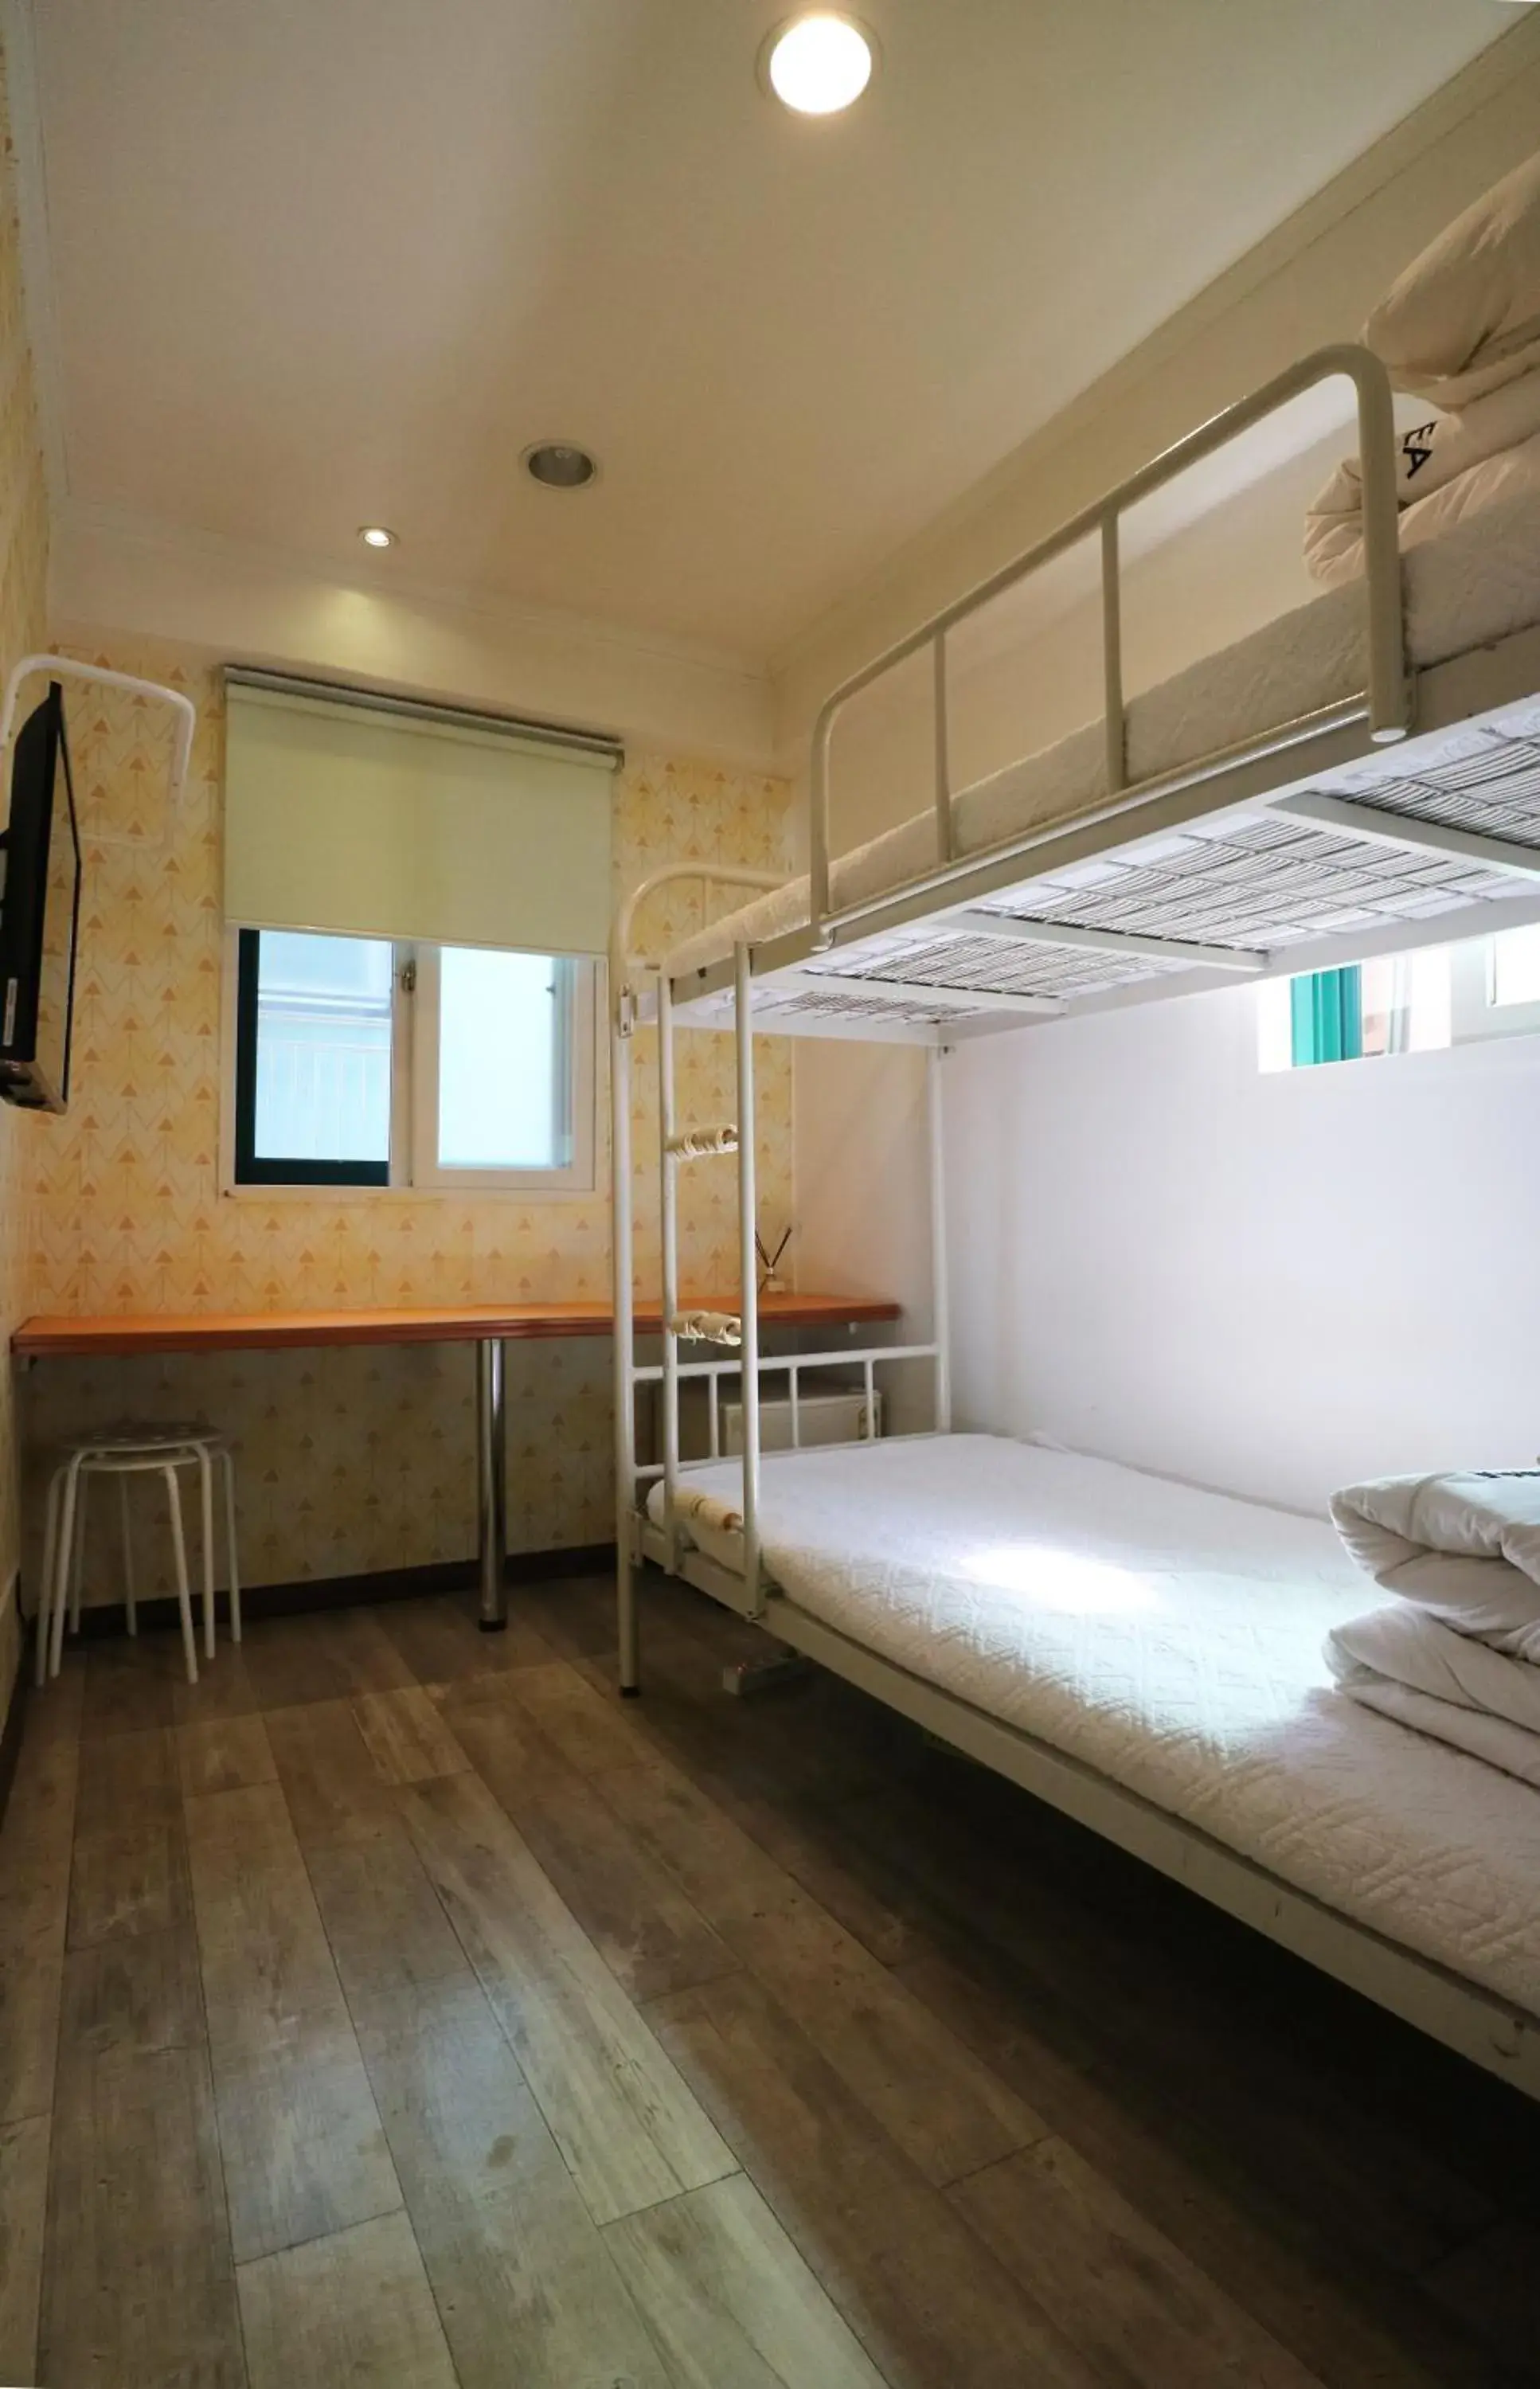 Bunk Bed in Hostel Korea Original